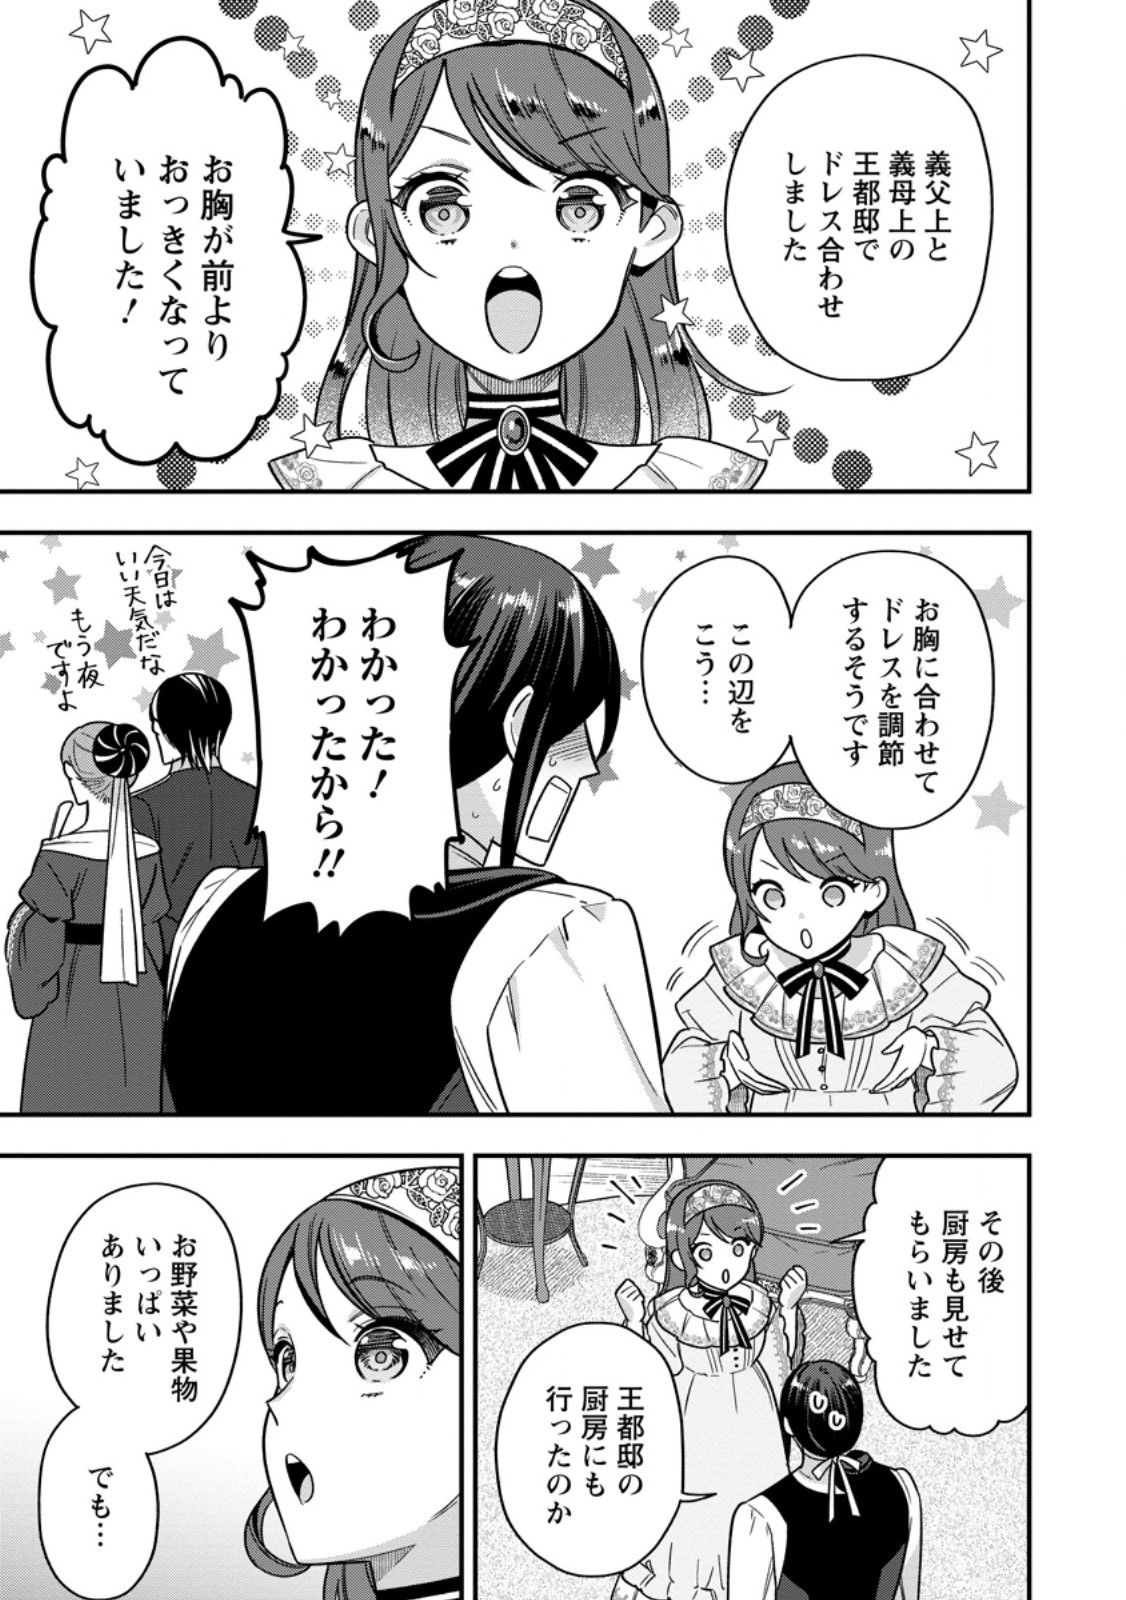 Aisanai to Iwaremashite mo - Chapter 9.3 - Page 3